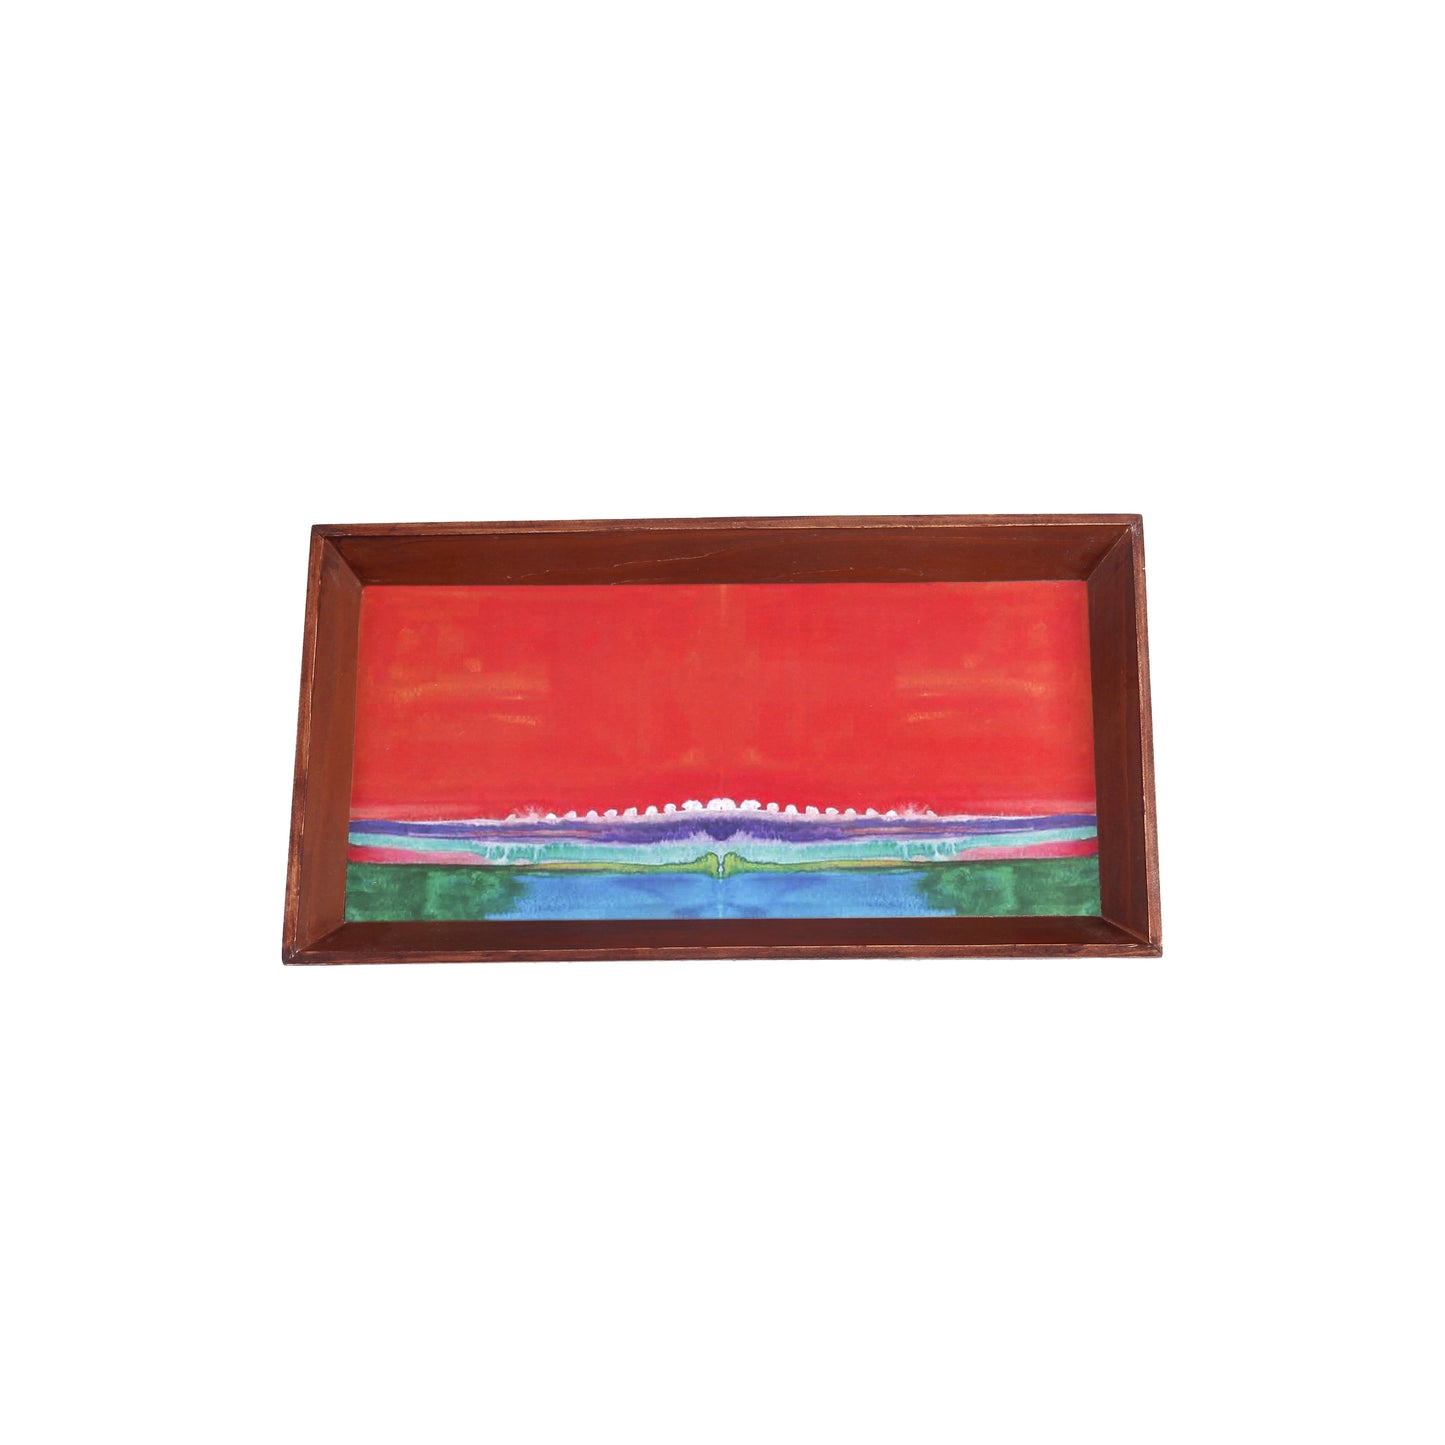 A Tiny Mistake Horizon Rectangle Wooden Serving Tray, 35 x 20 x 2 cm